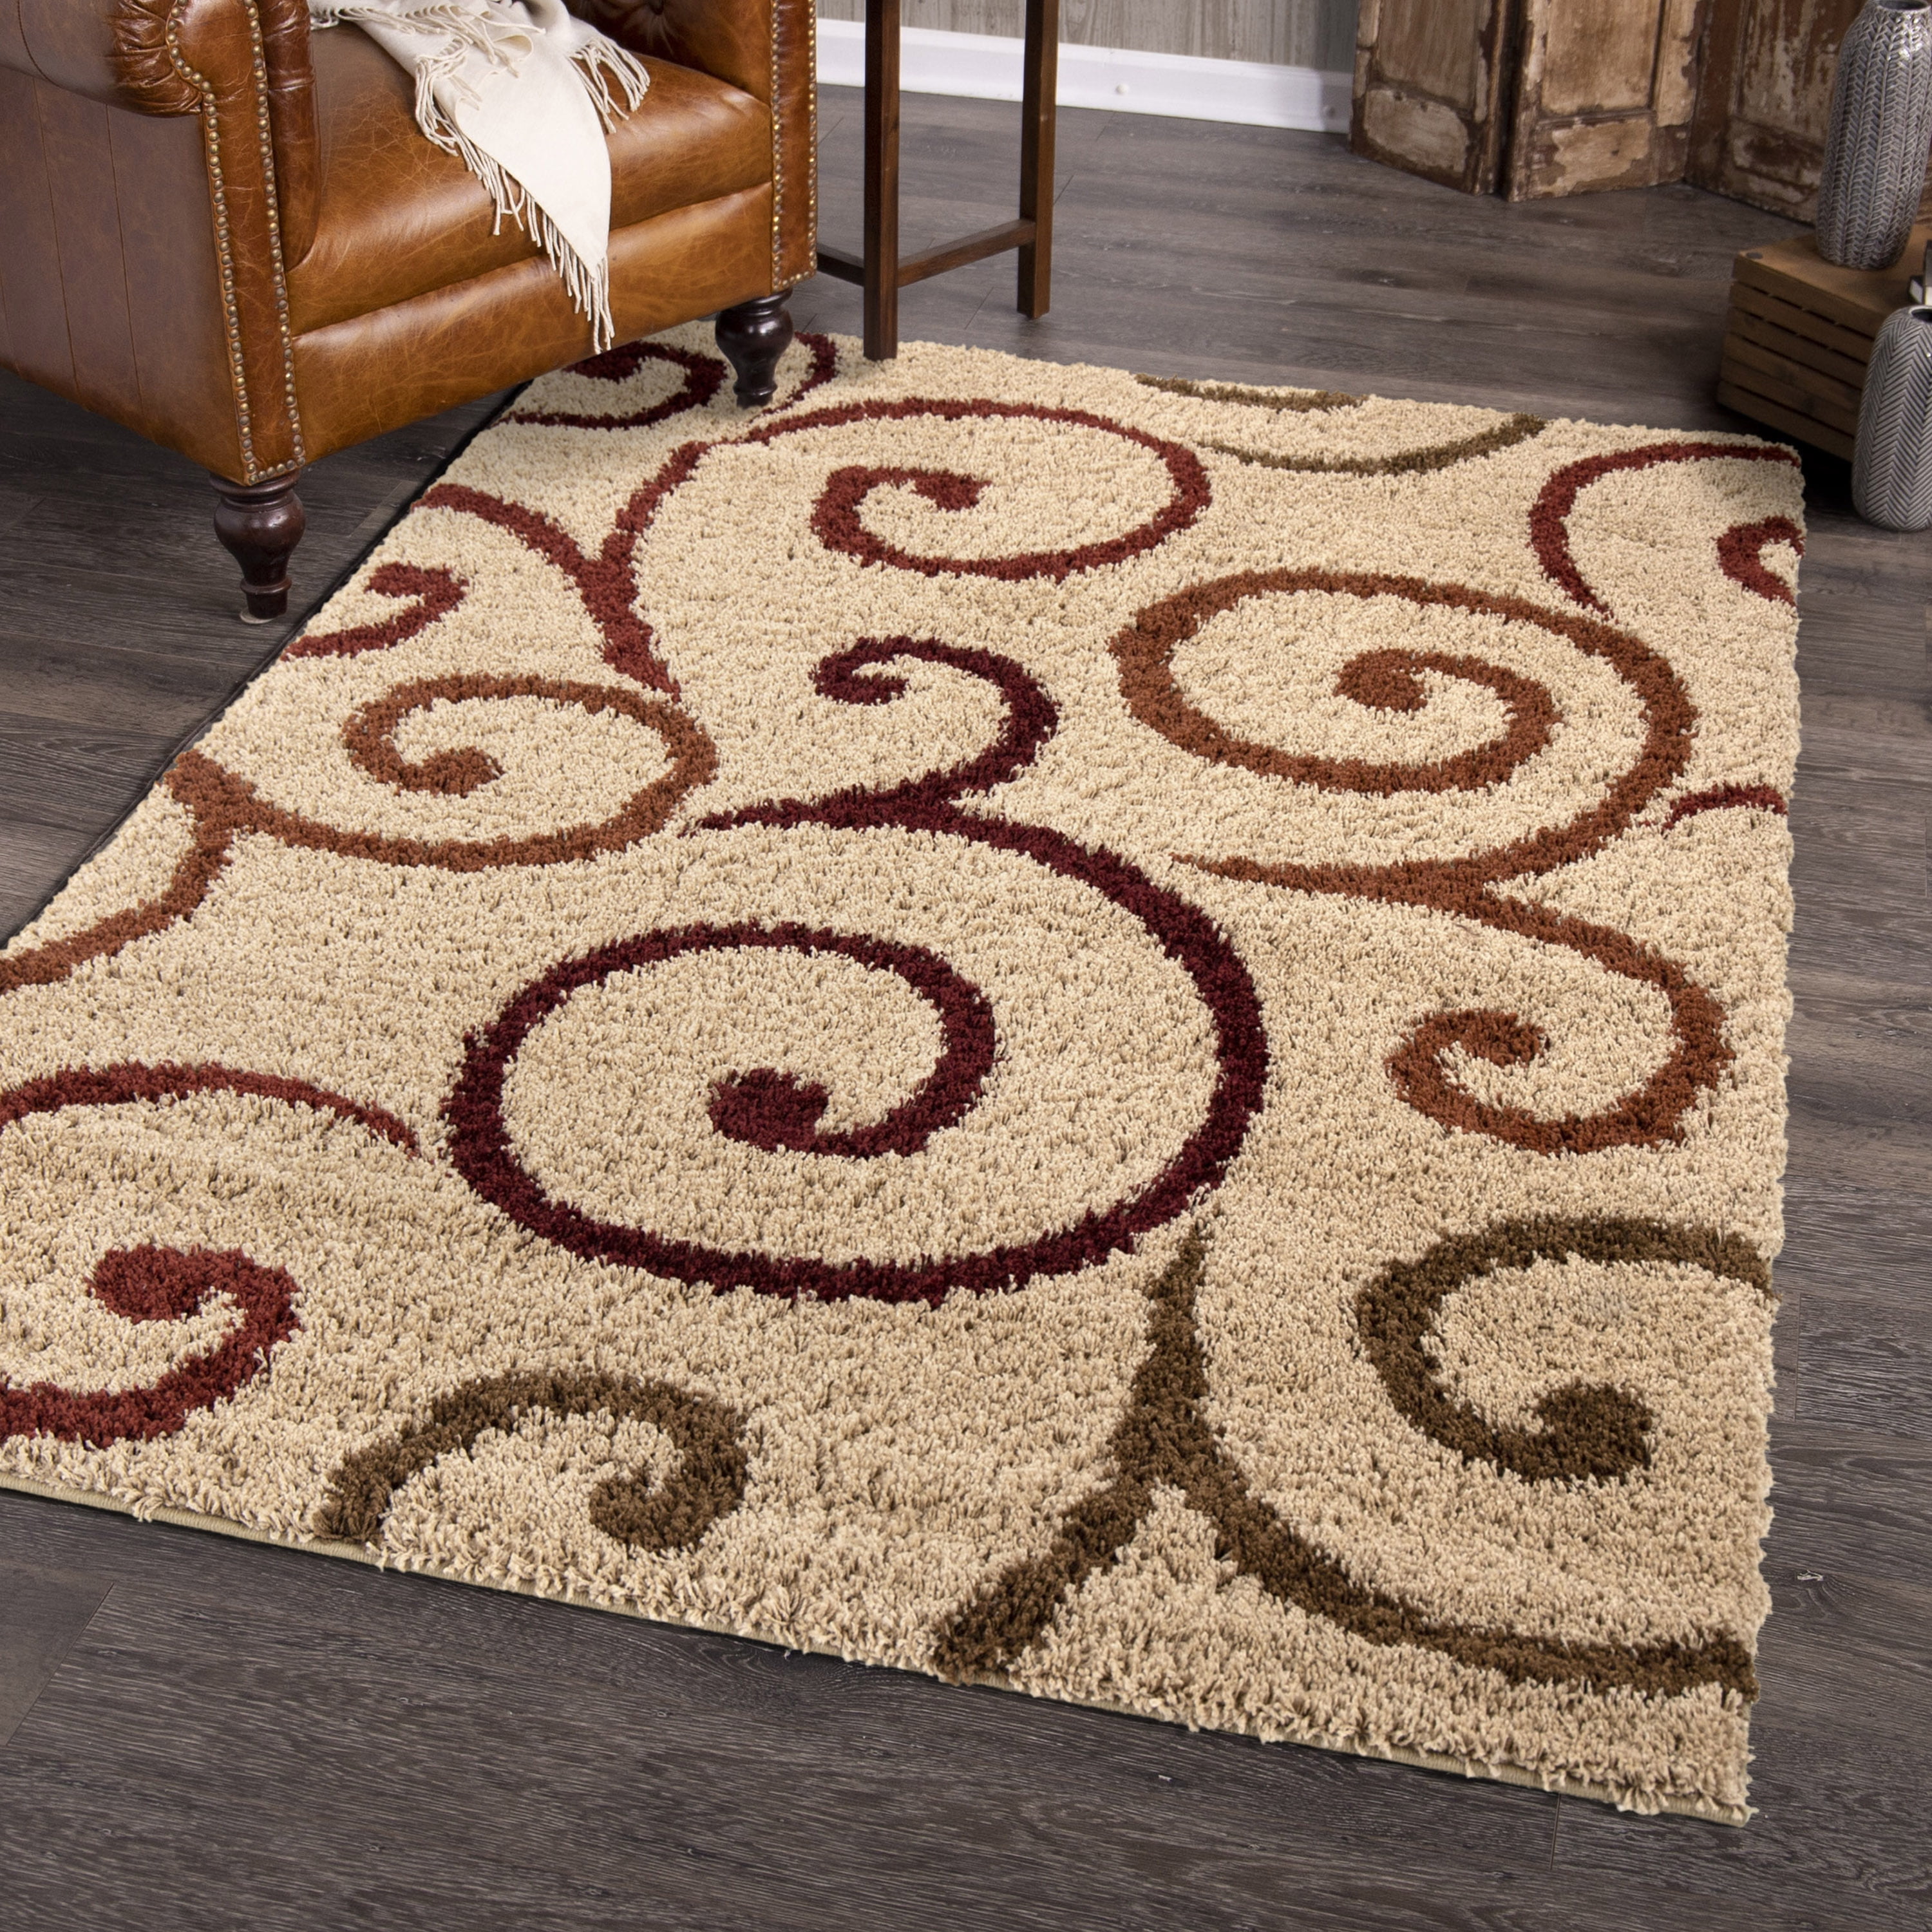 Music Vinyl Record Round Door Mat Living Room Area Rugs Home Floor Yoga Carpet 